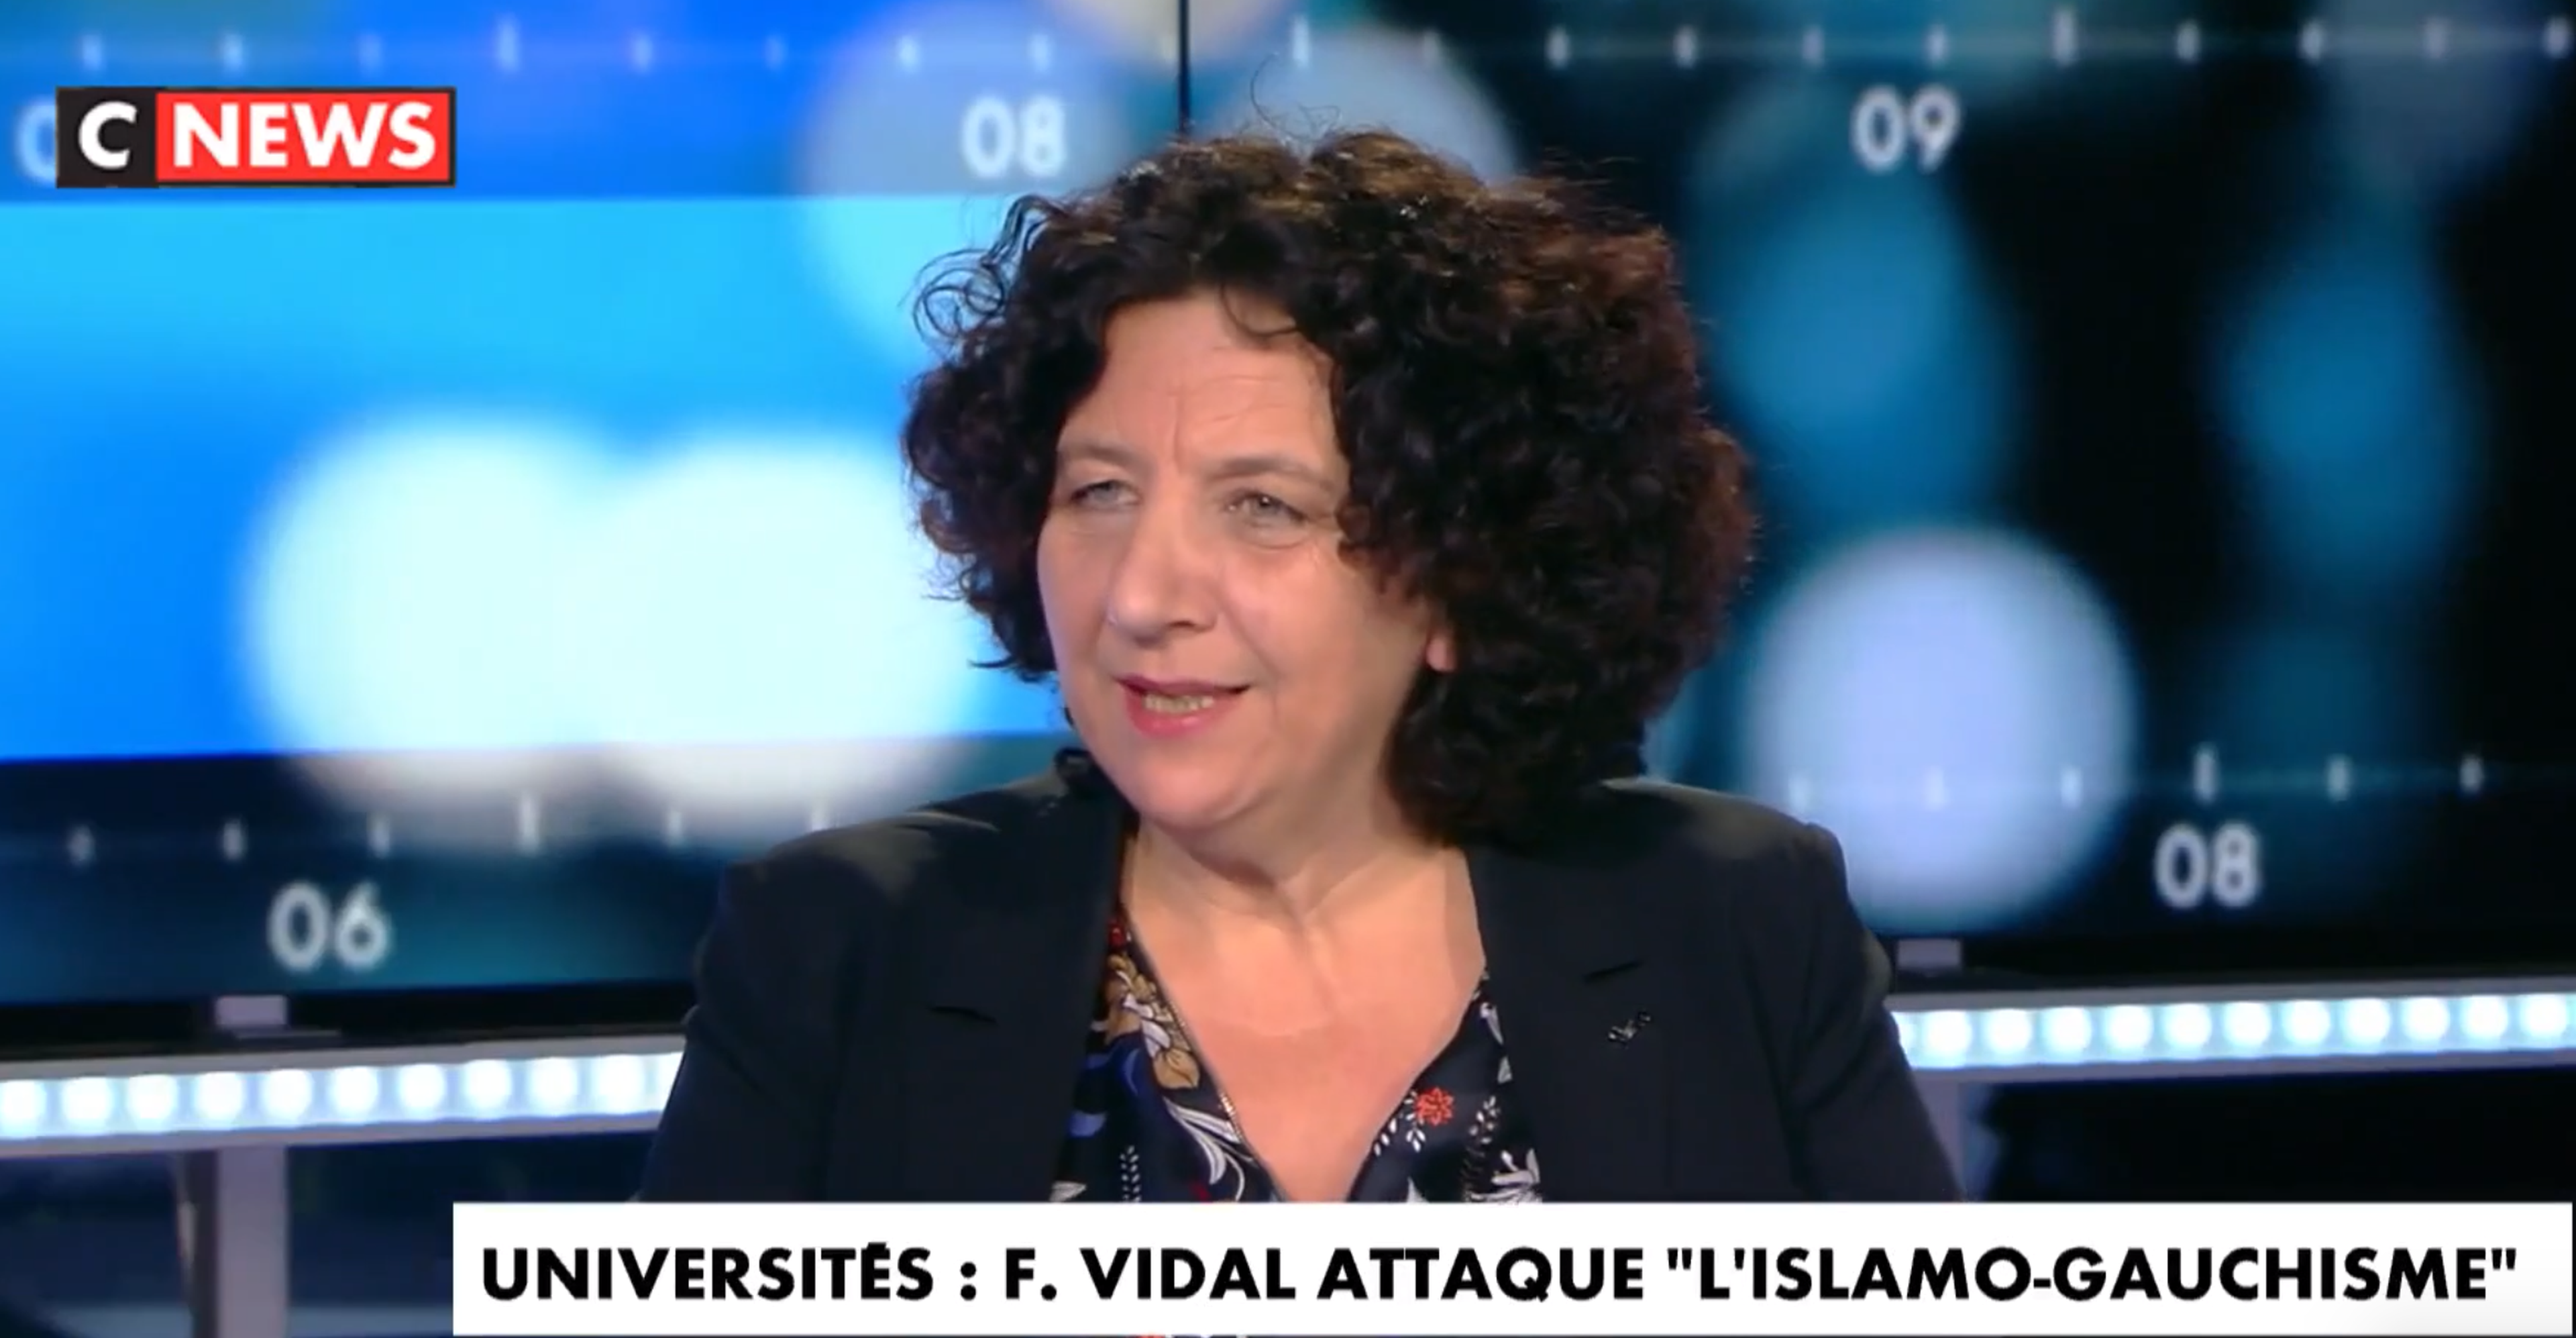 /2021/02/Frédérique Vidal, islamo-gauchisme, universités, CNRS, _1